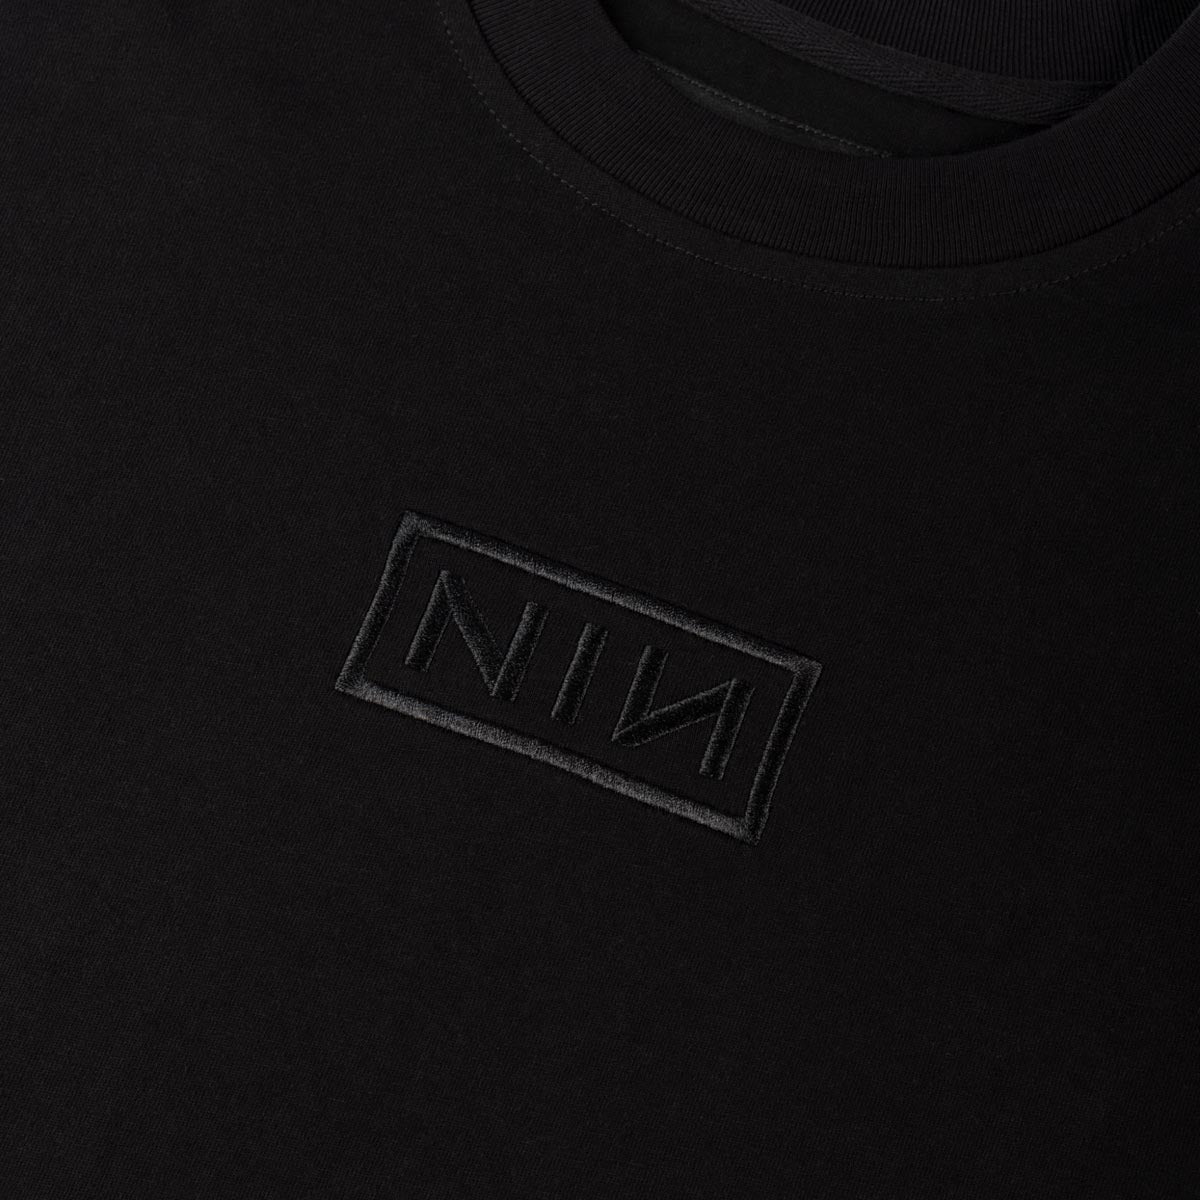 Welcome x Nine Inch Nails Heresy Layered Knit Shirt - Black/Bone image 5